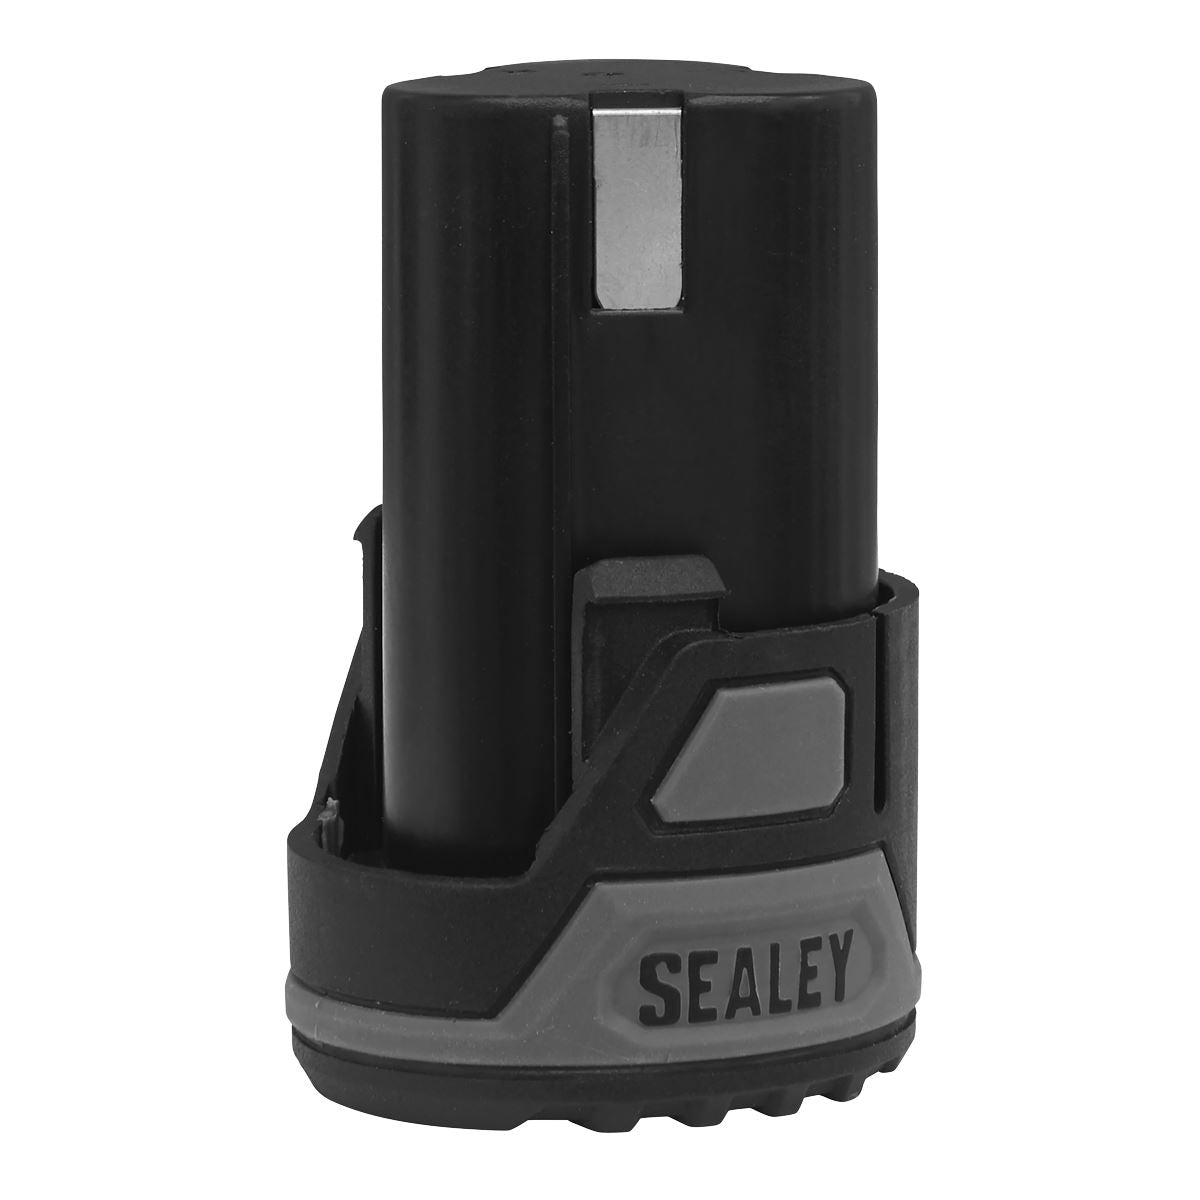 Sealey 2 x 10.8V SV10.8 Series Combi Drill & Impact Driver Kit